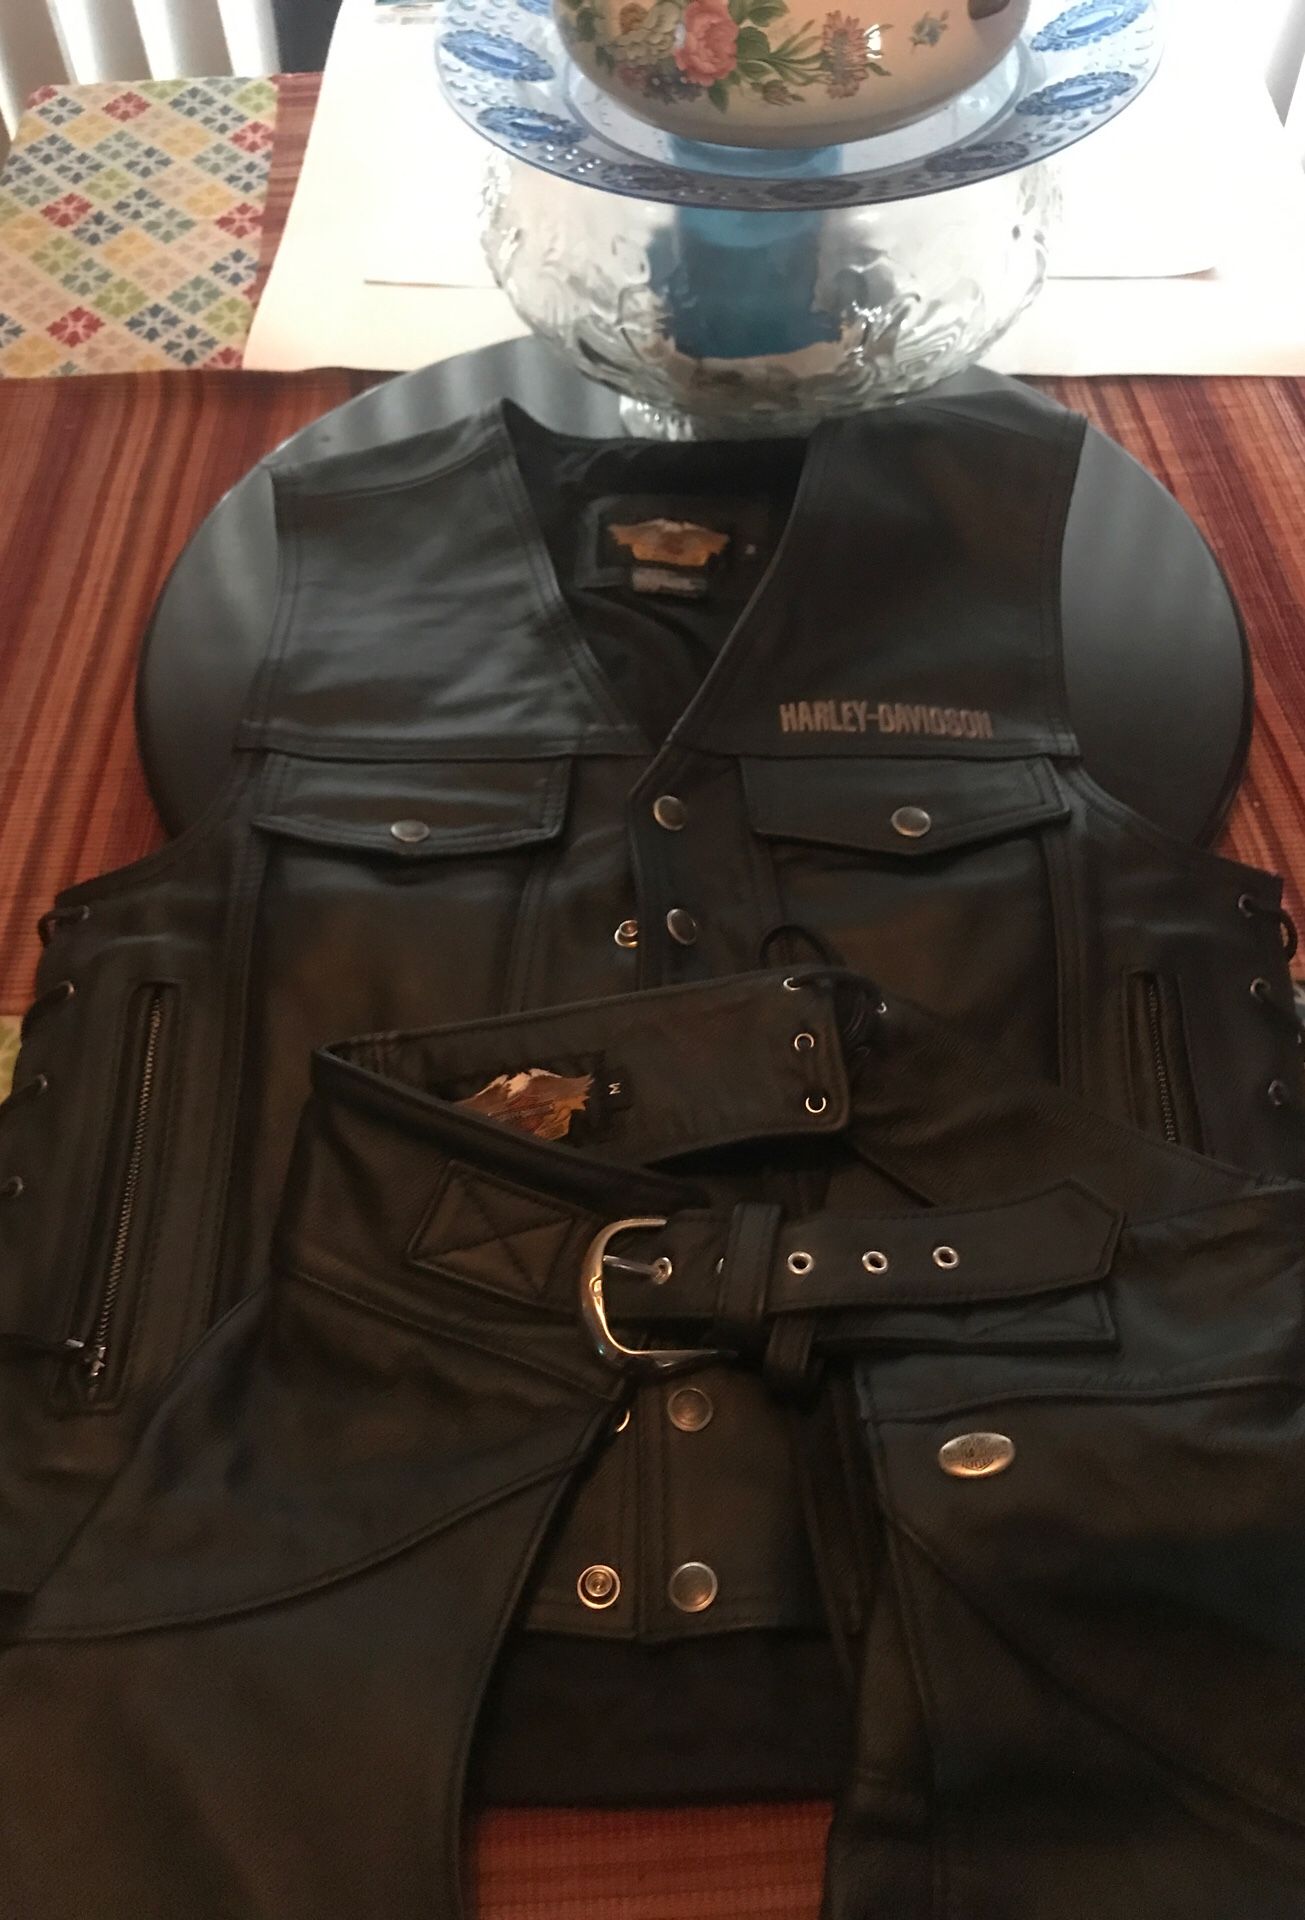 Harley-Davidson vest and chaps